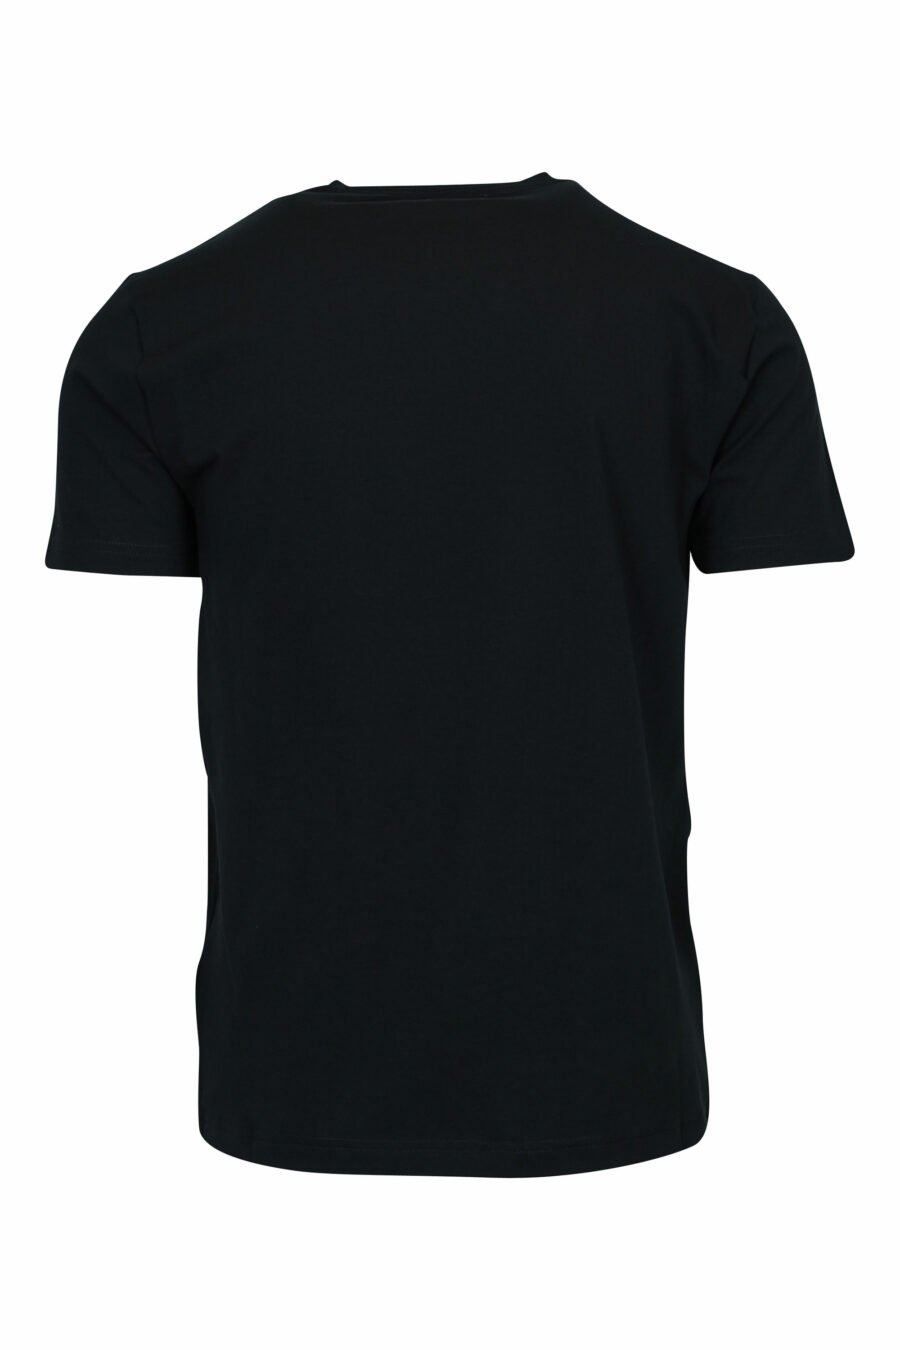 Black T-shirt with neon gold "lux identity" maxilogo - 8057970672234 1